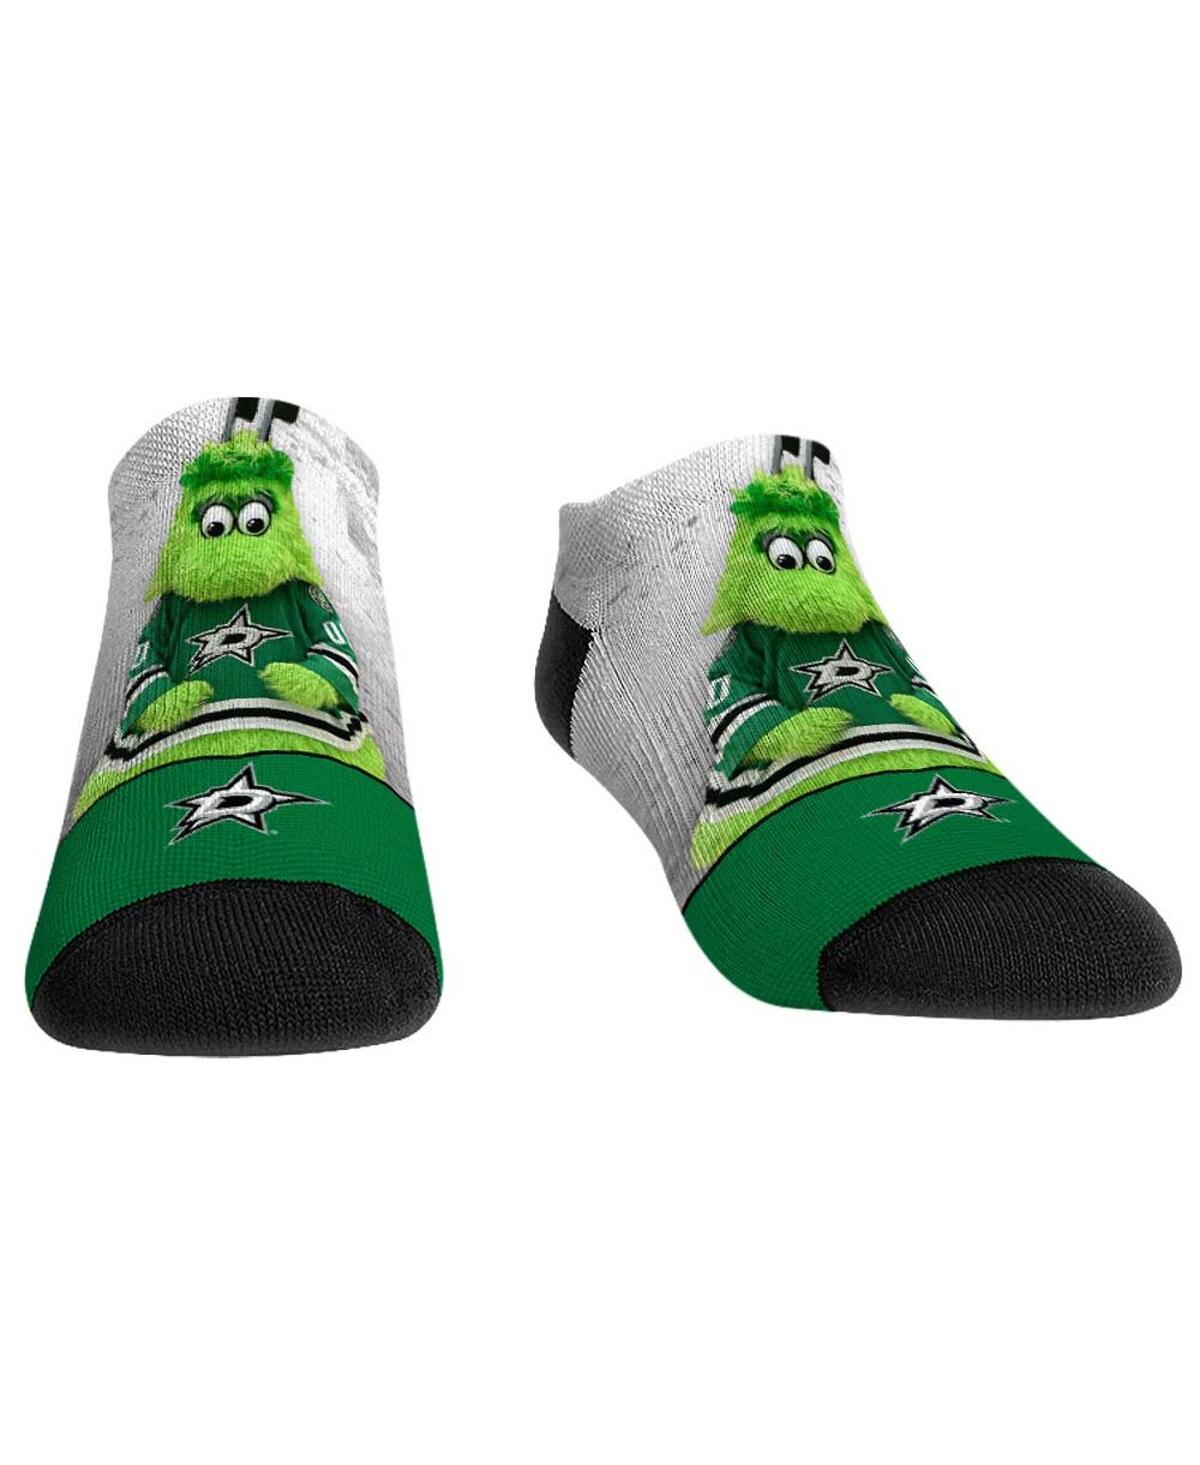 Men's and Women's Rock 'Em Socks Dallas Stars Mascot Walkout Low Cut Socks - Green